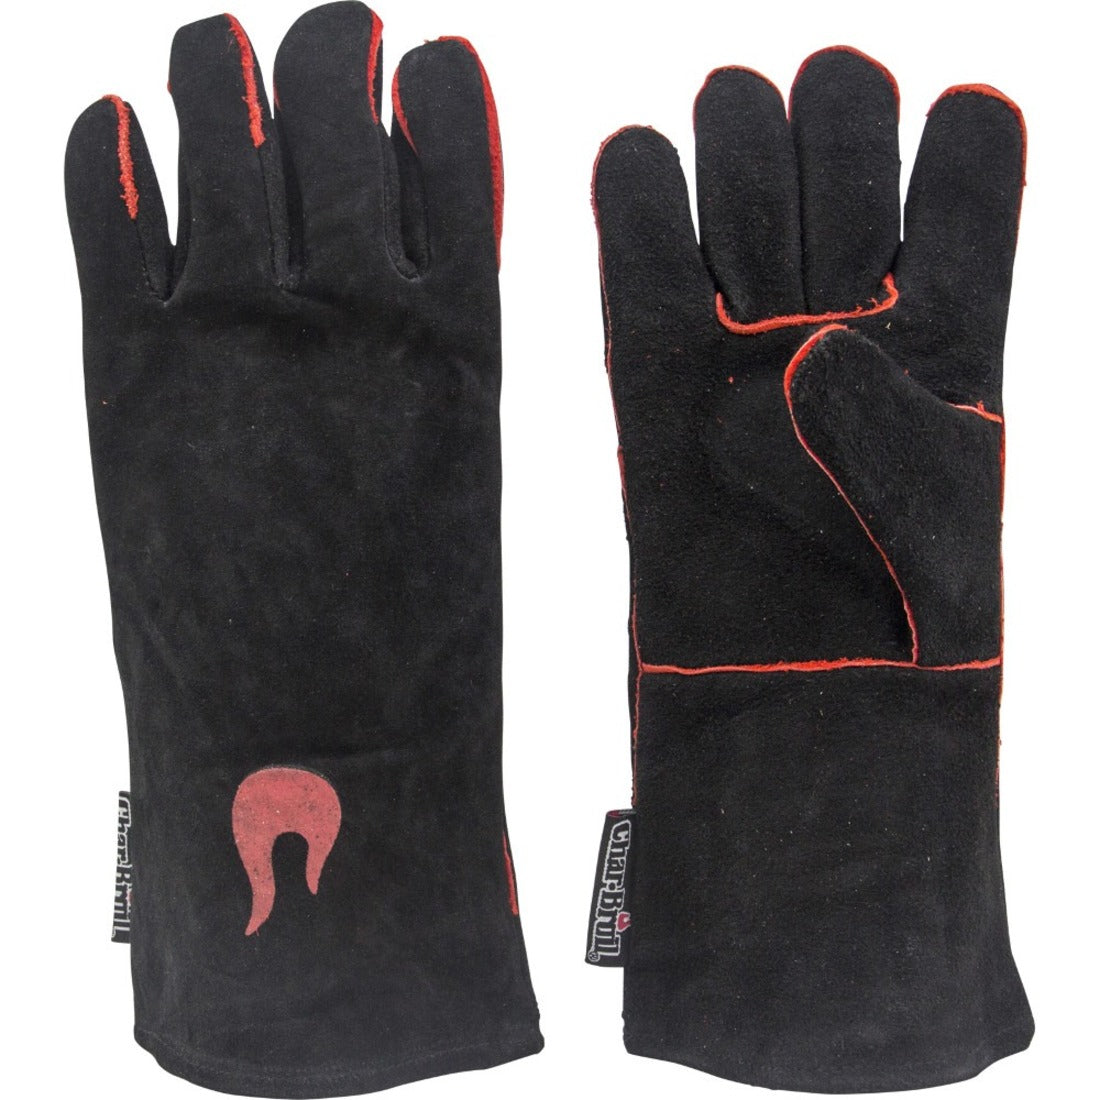 Char-Broil 9987454 Work Gloves, Flame Resistant, Durable, Non-slip Grip, Medium Size, Black